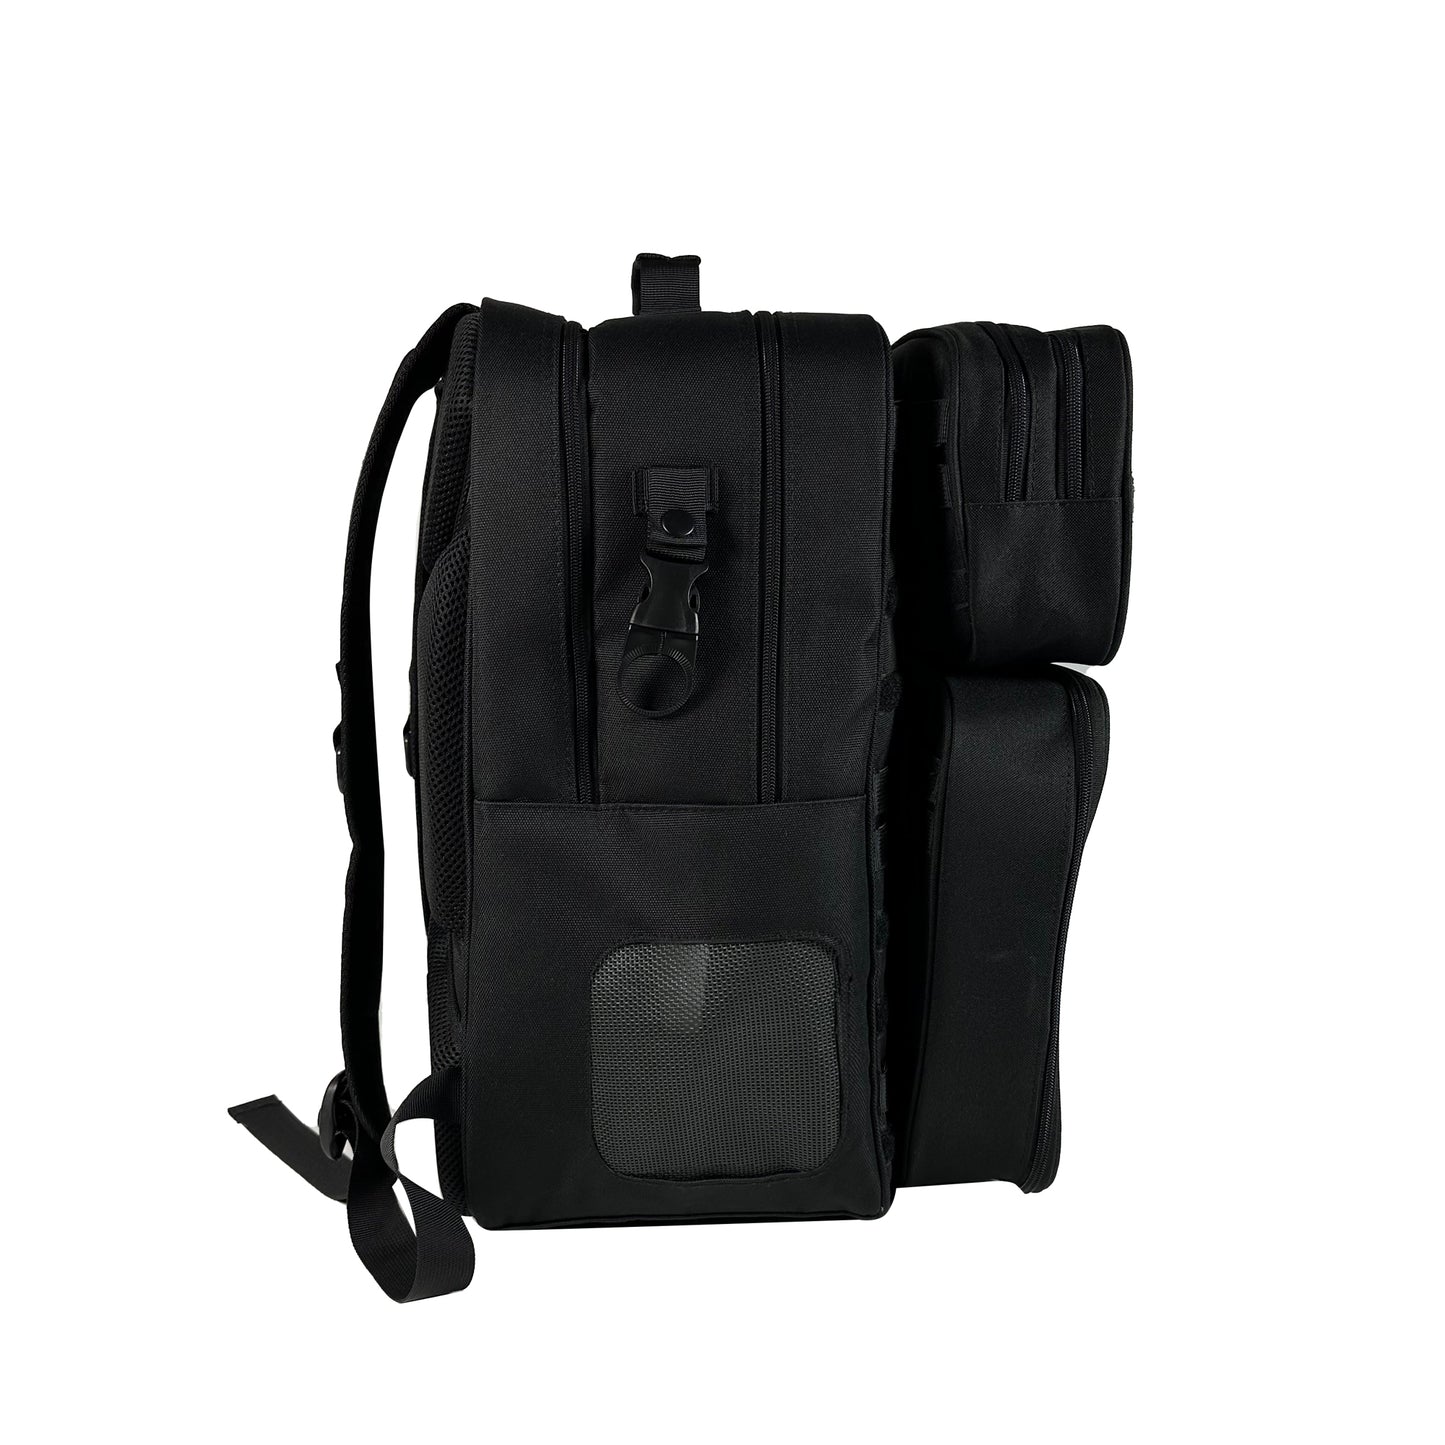 Nexus Bag 2.0 - The Bowler's Backpack